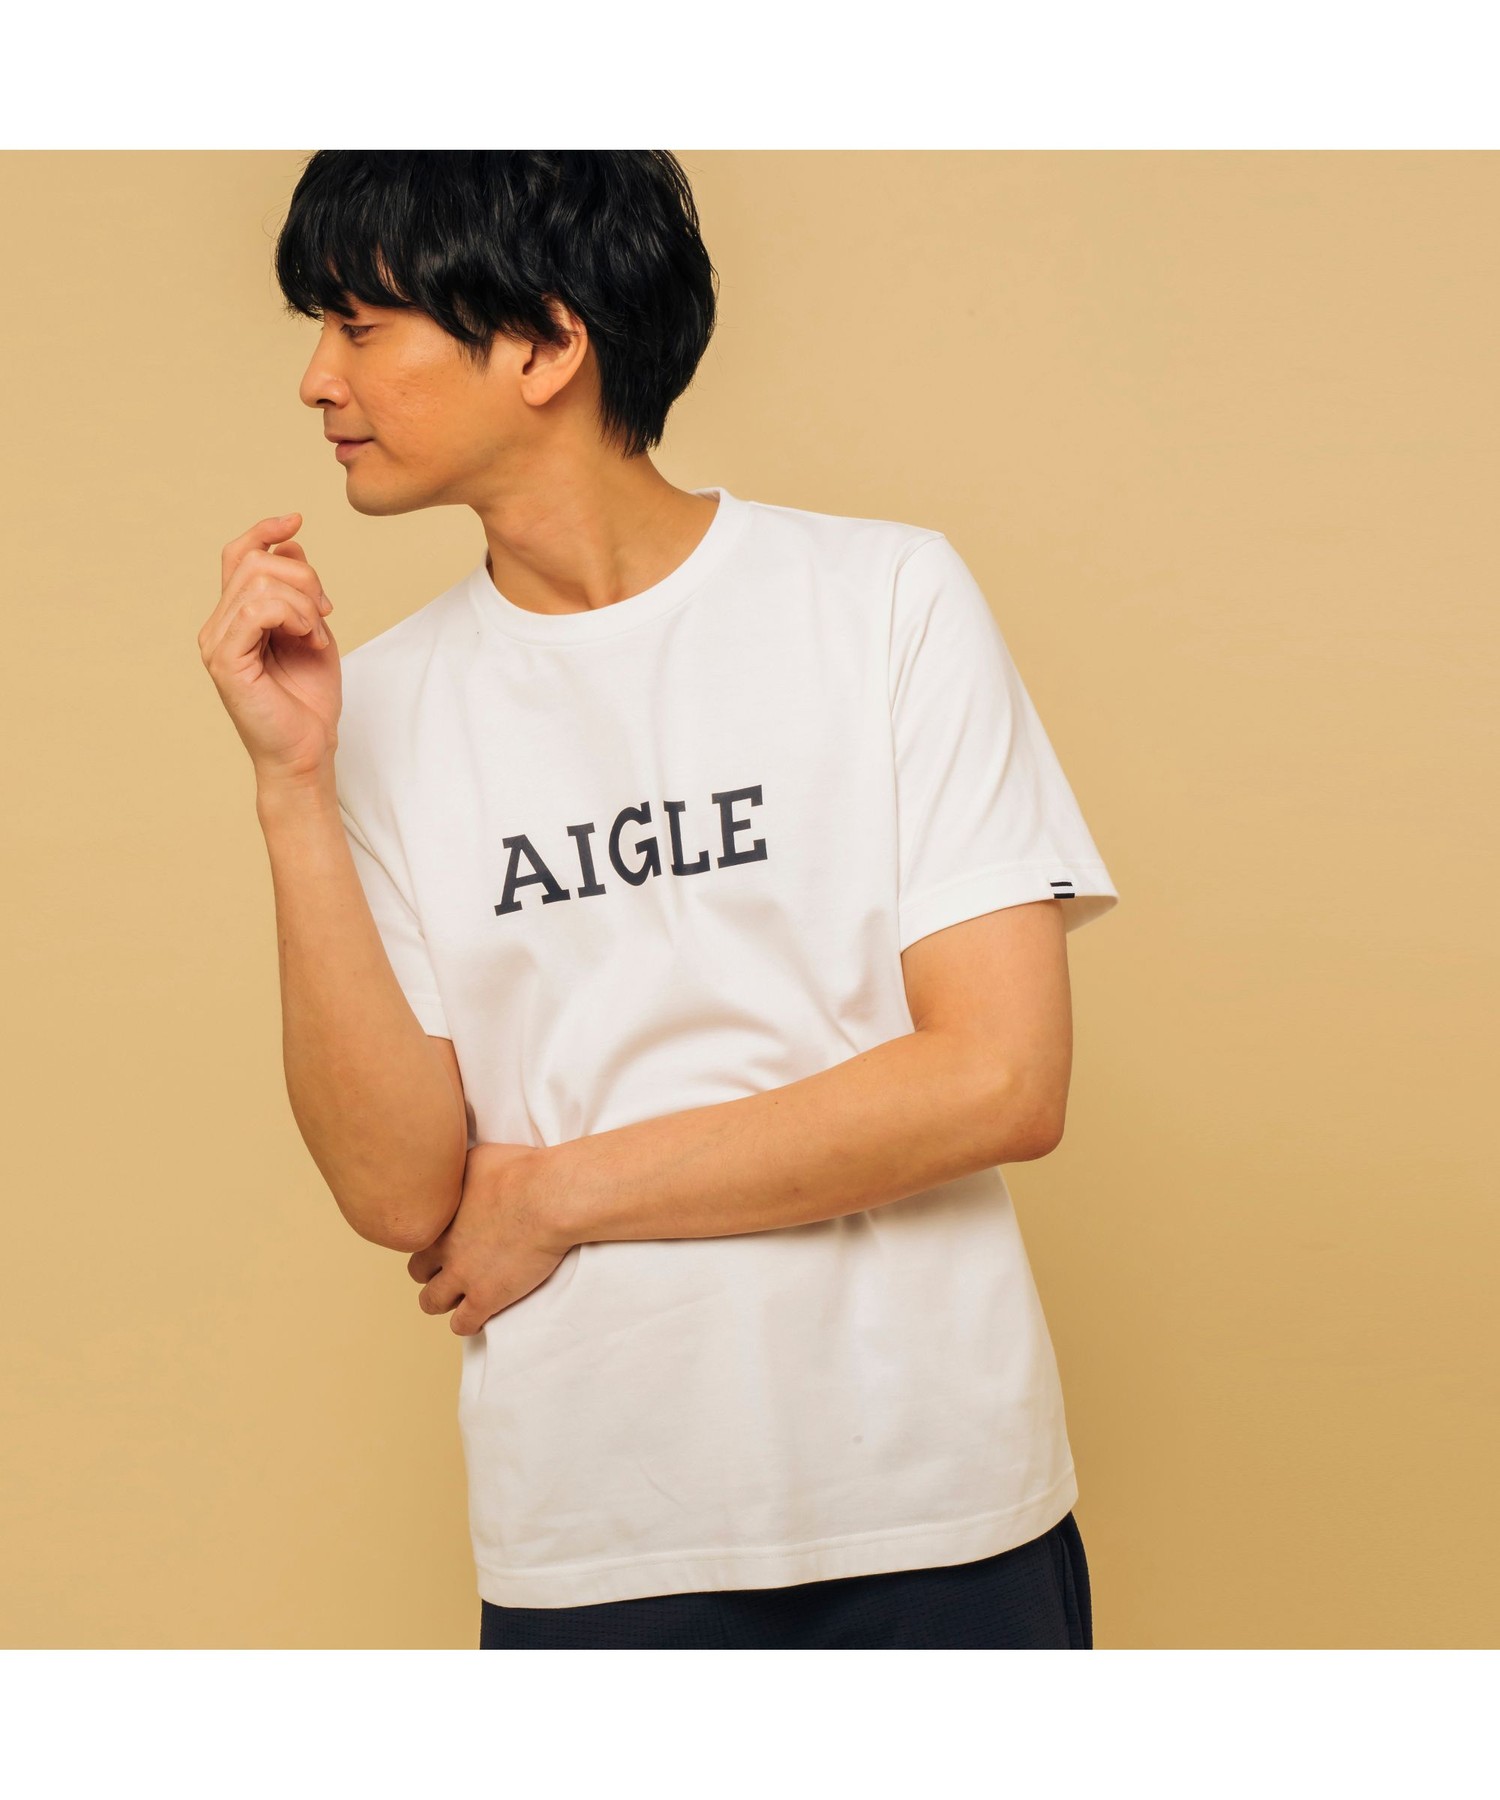 AIGLE吸水速乾 エーグル グラフィック ロゴTシャツ 爆売りセール開催中 競売